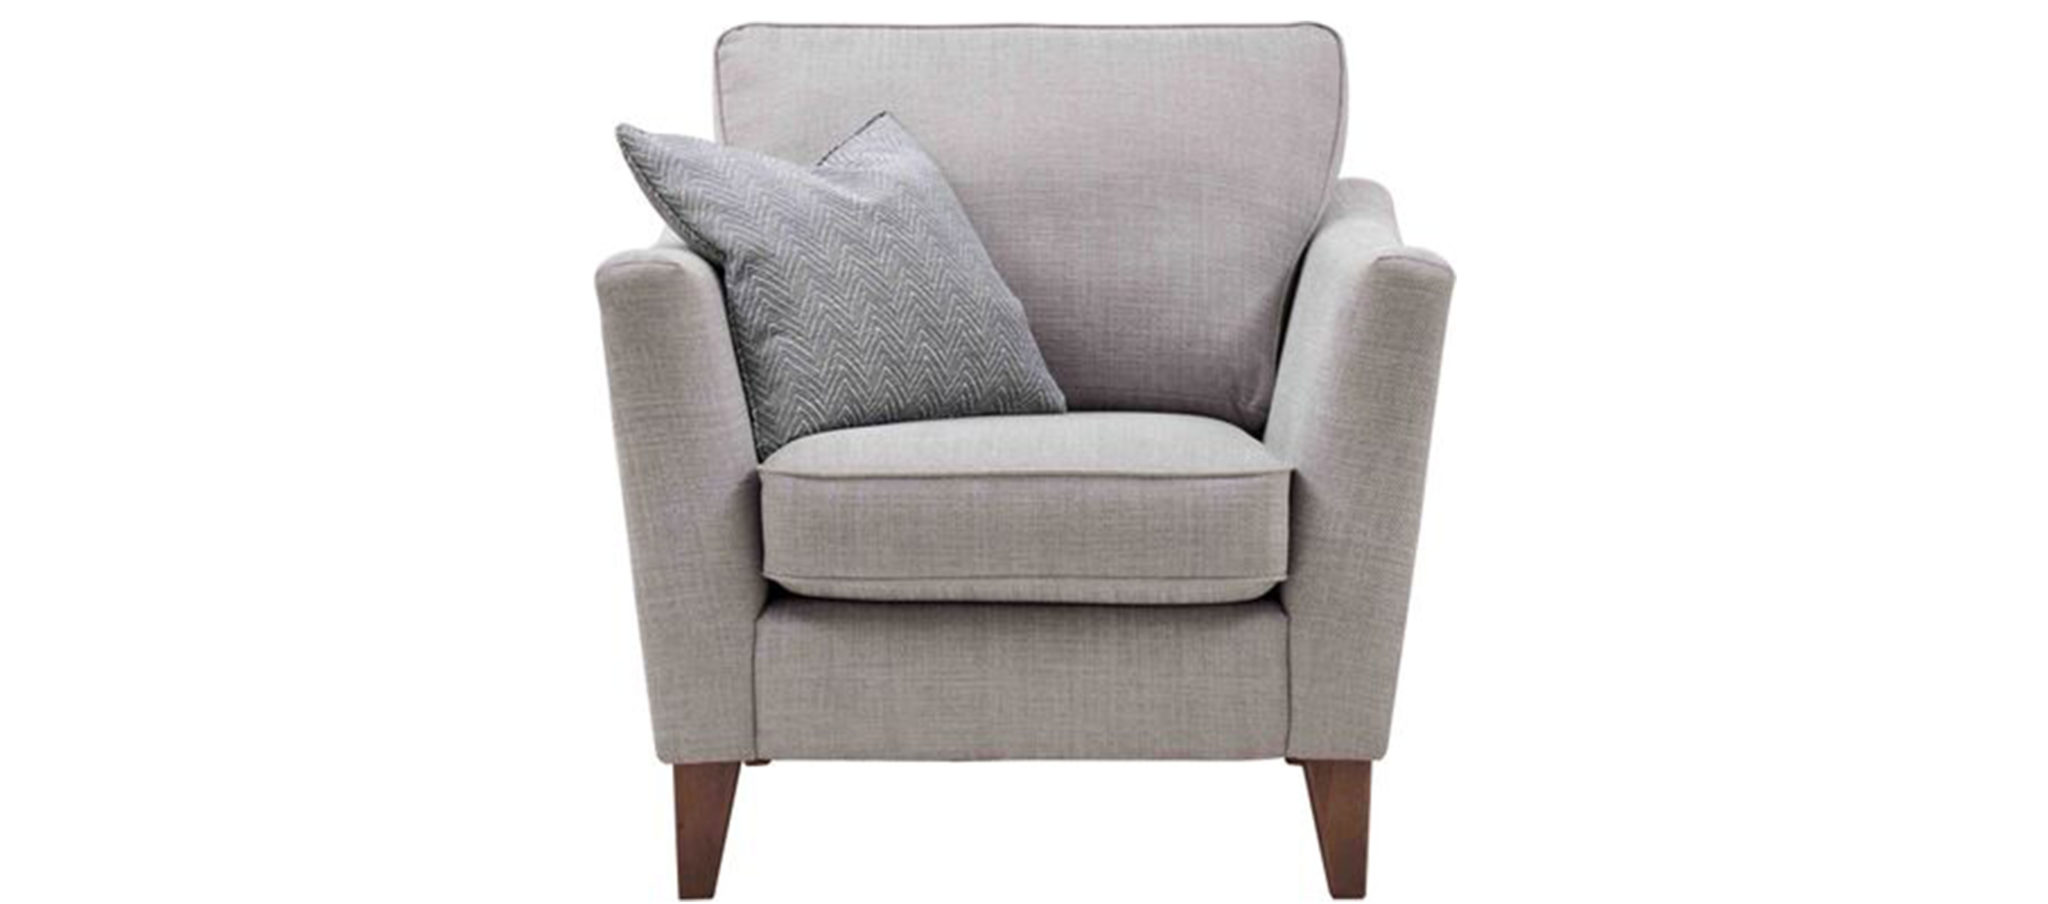 Atlanta Sofa & Chair Collection - Seats & Sofas Worcester